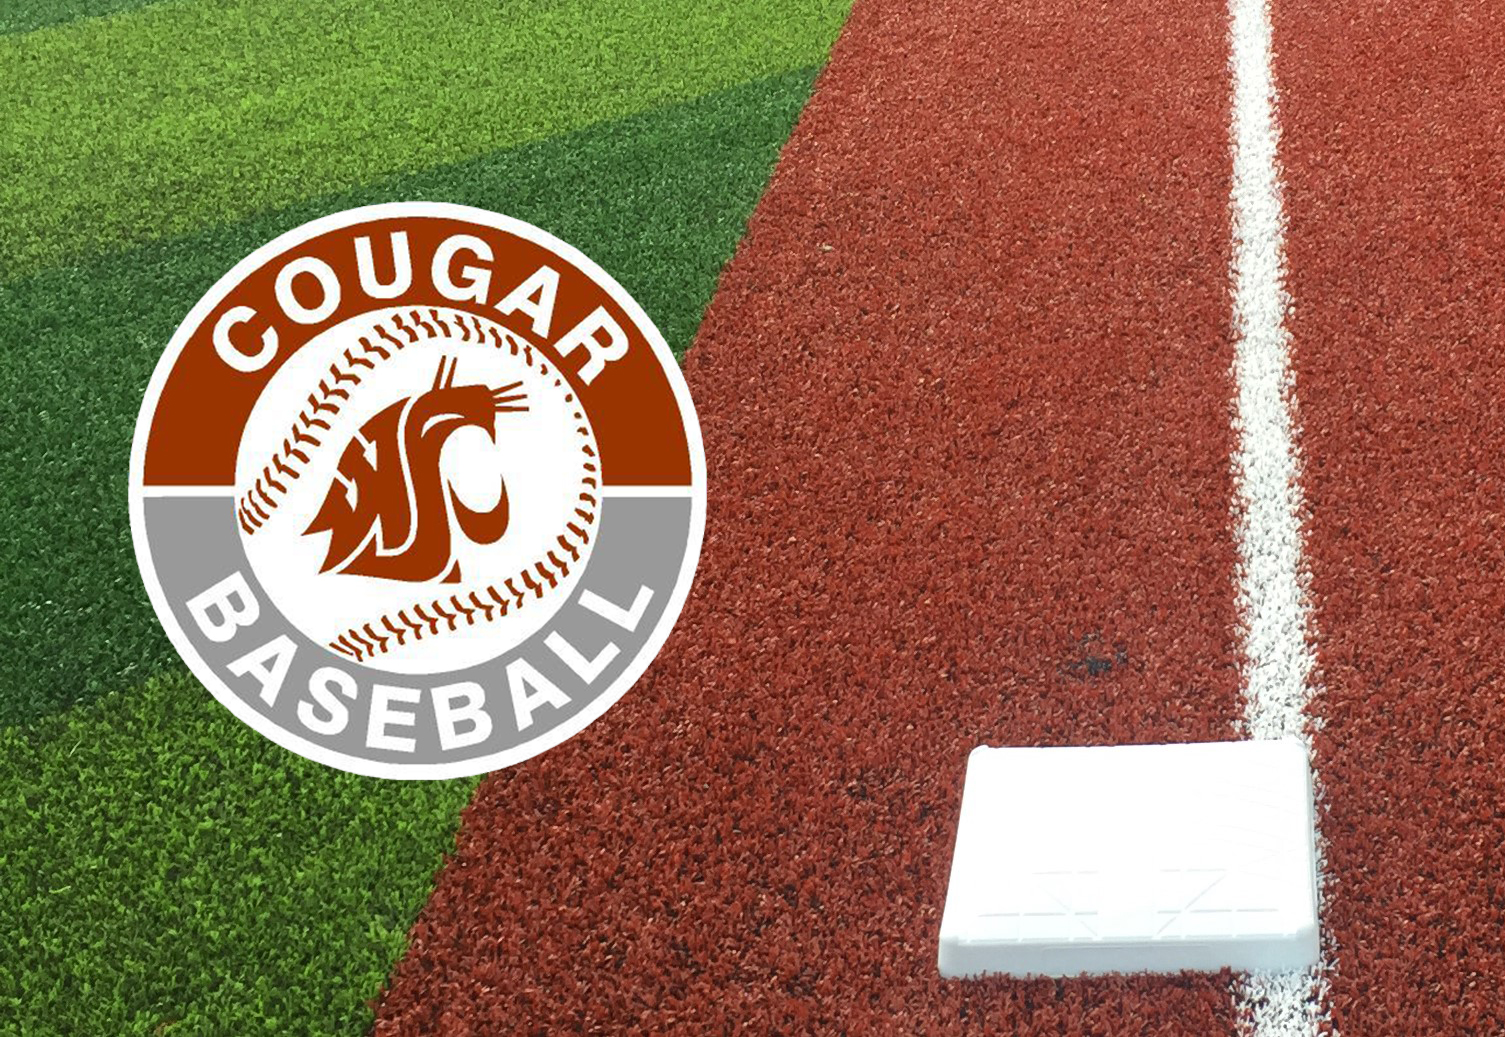 Washington State Baseball Chooses AstroTurf